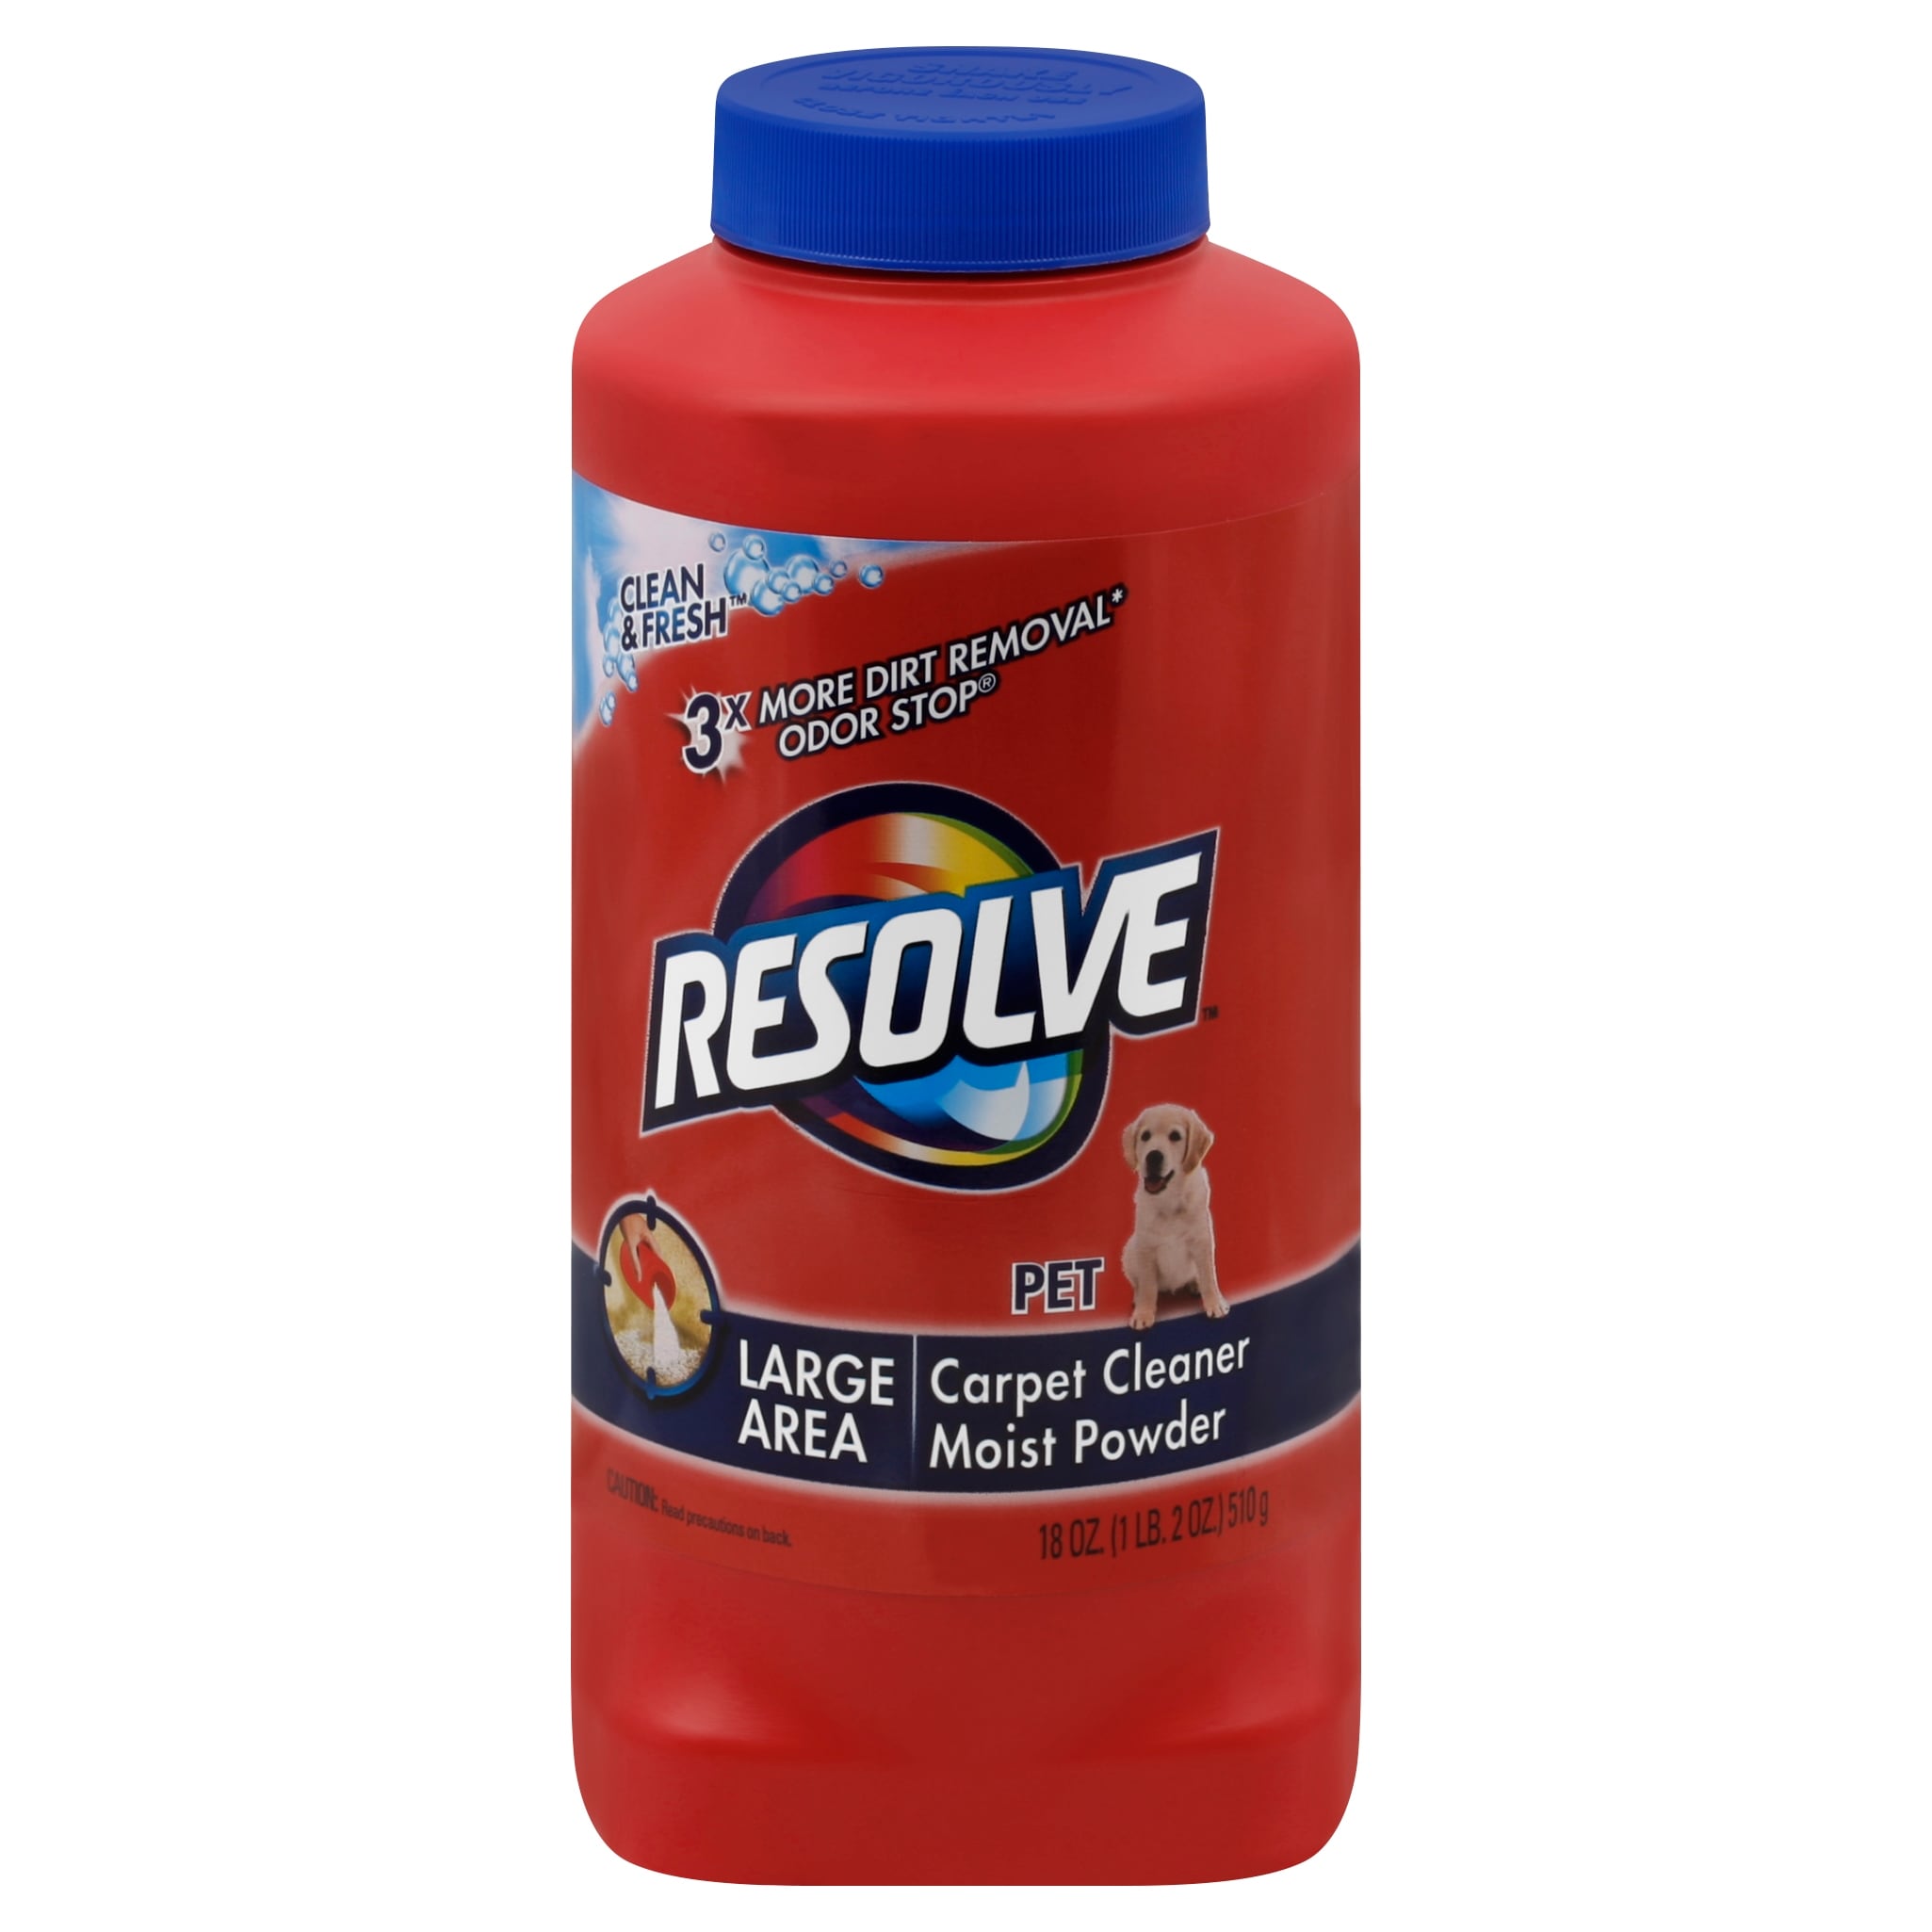 Resolve Carpet Cleaner Powder 18-oz at